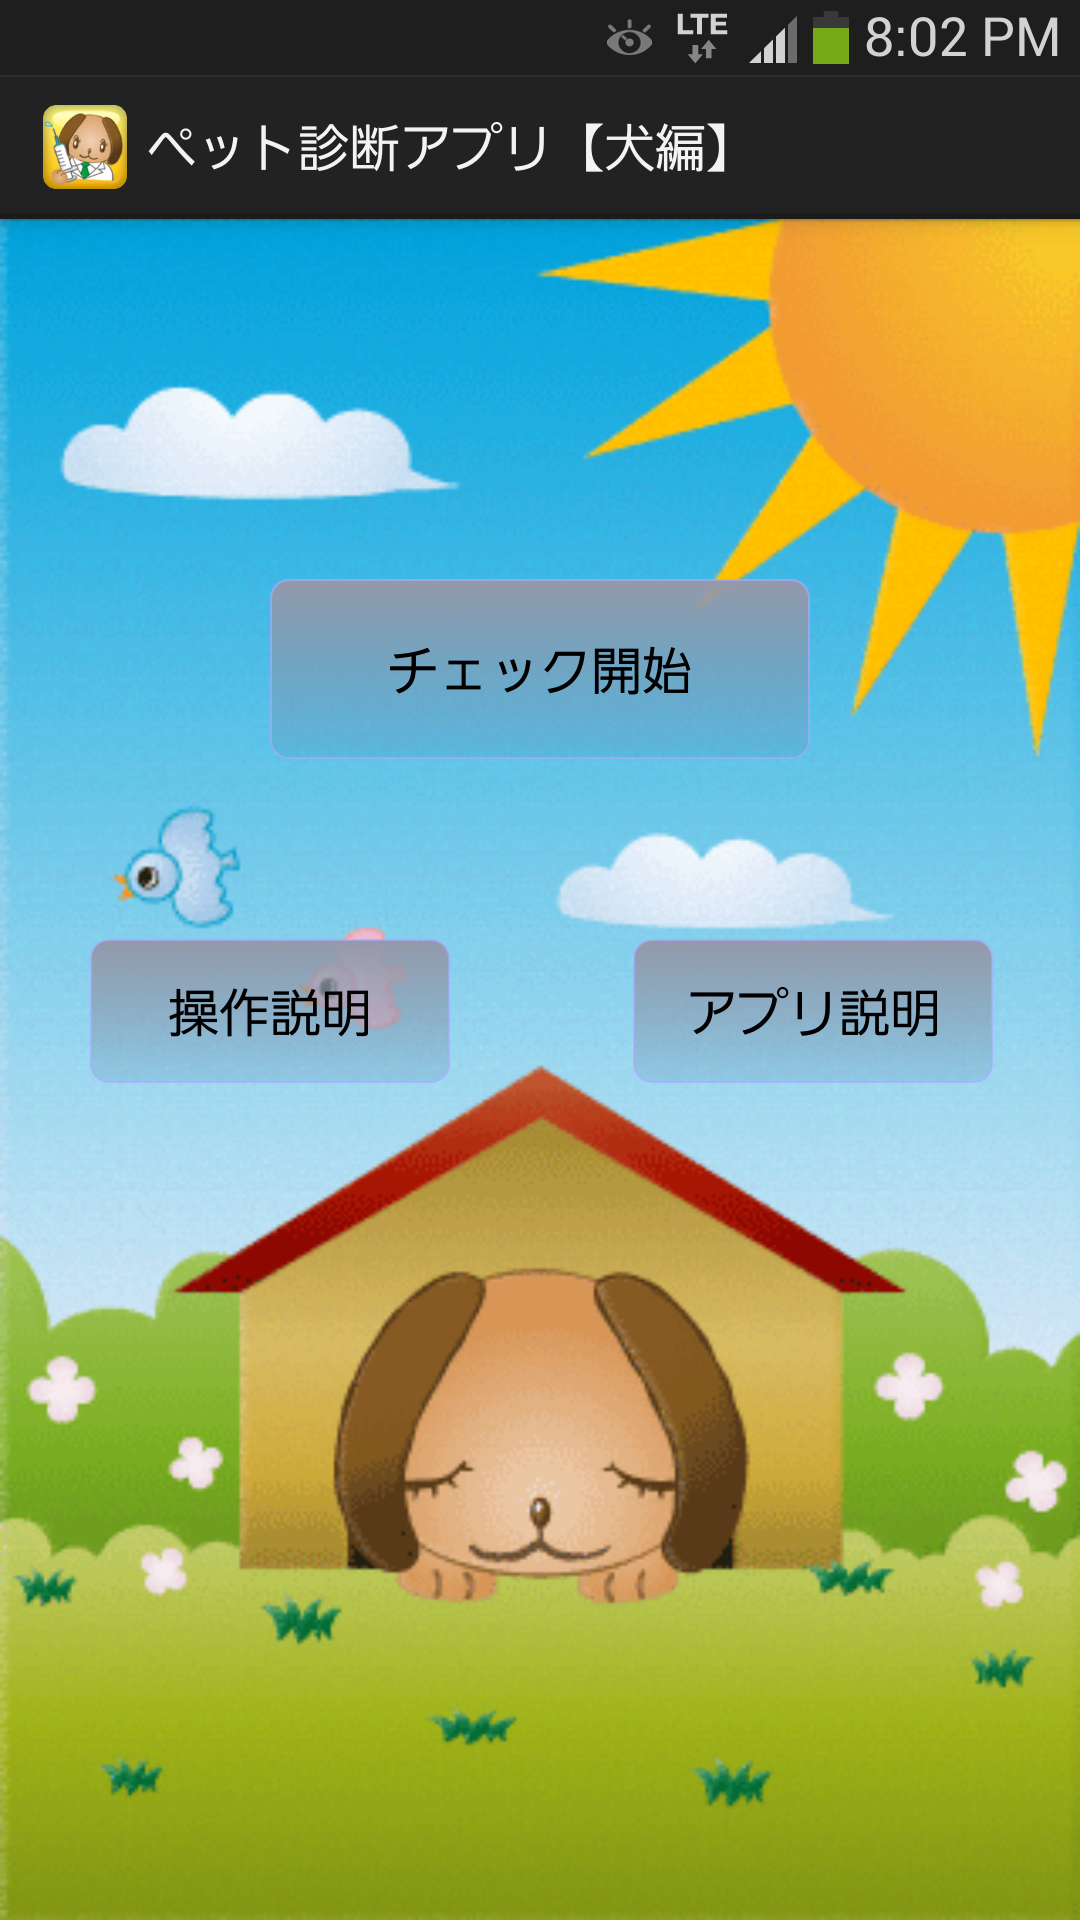 Android application ペット診断アプリ【犬編】 screenshort